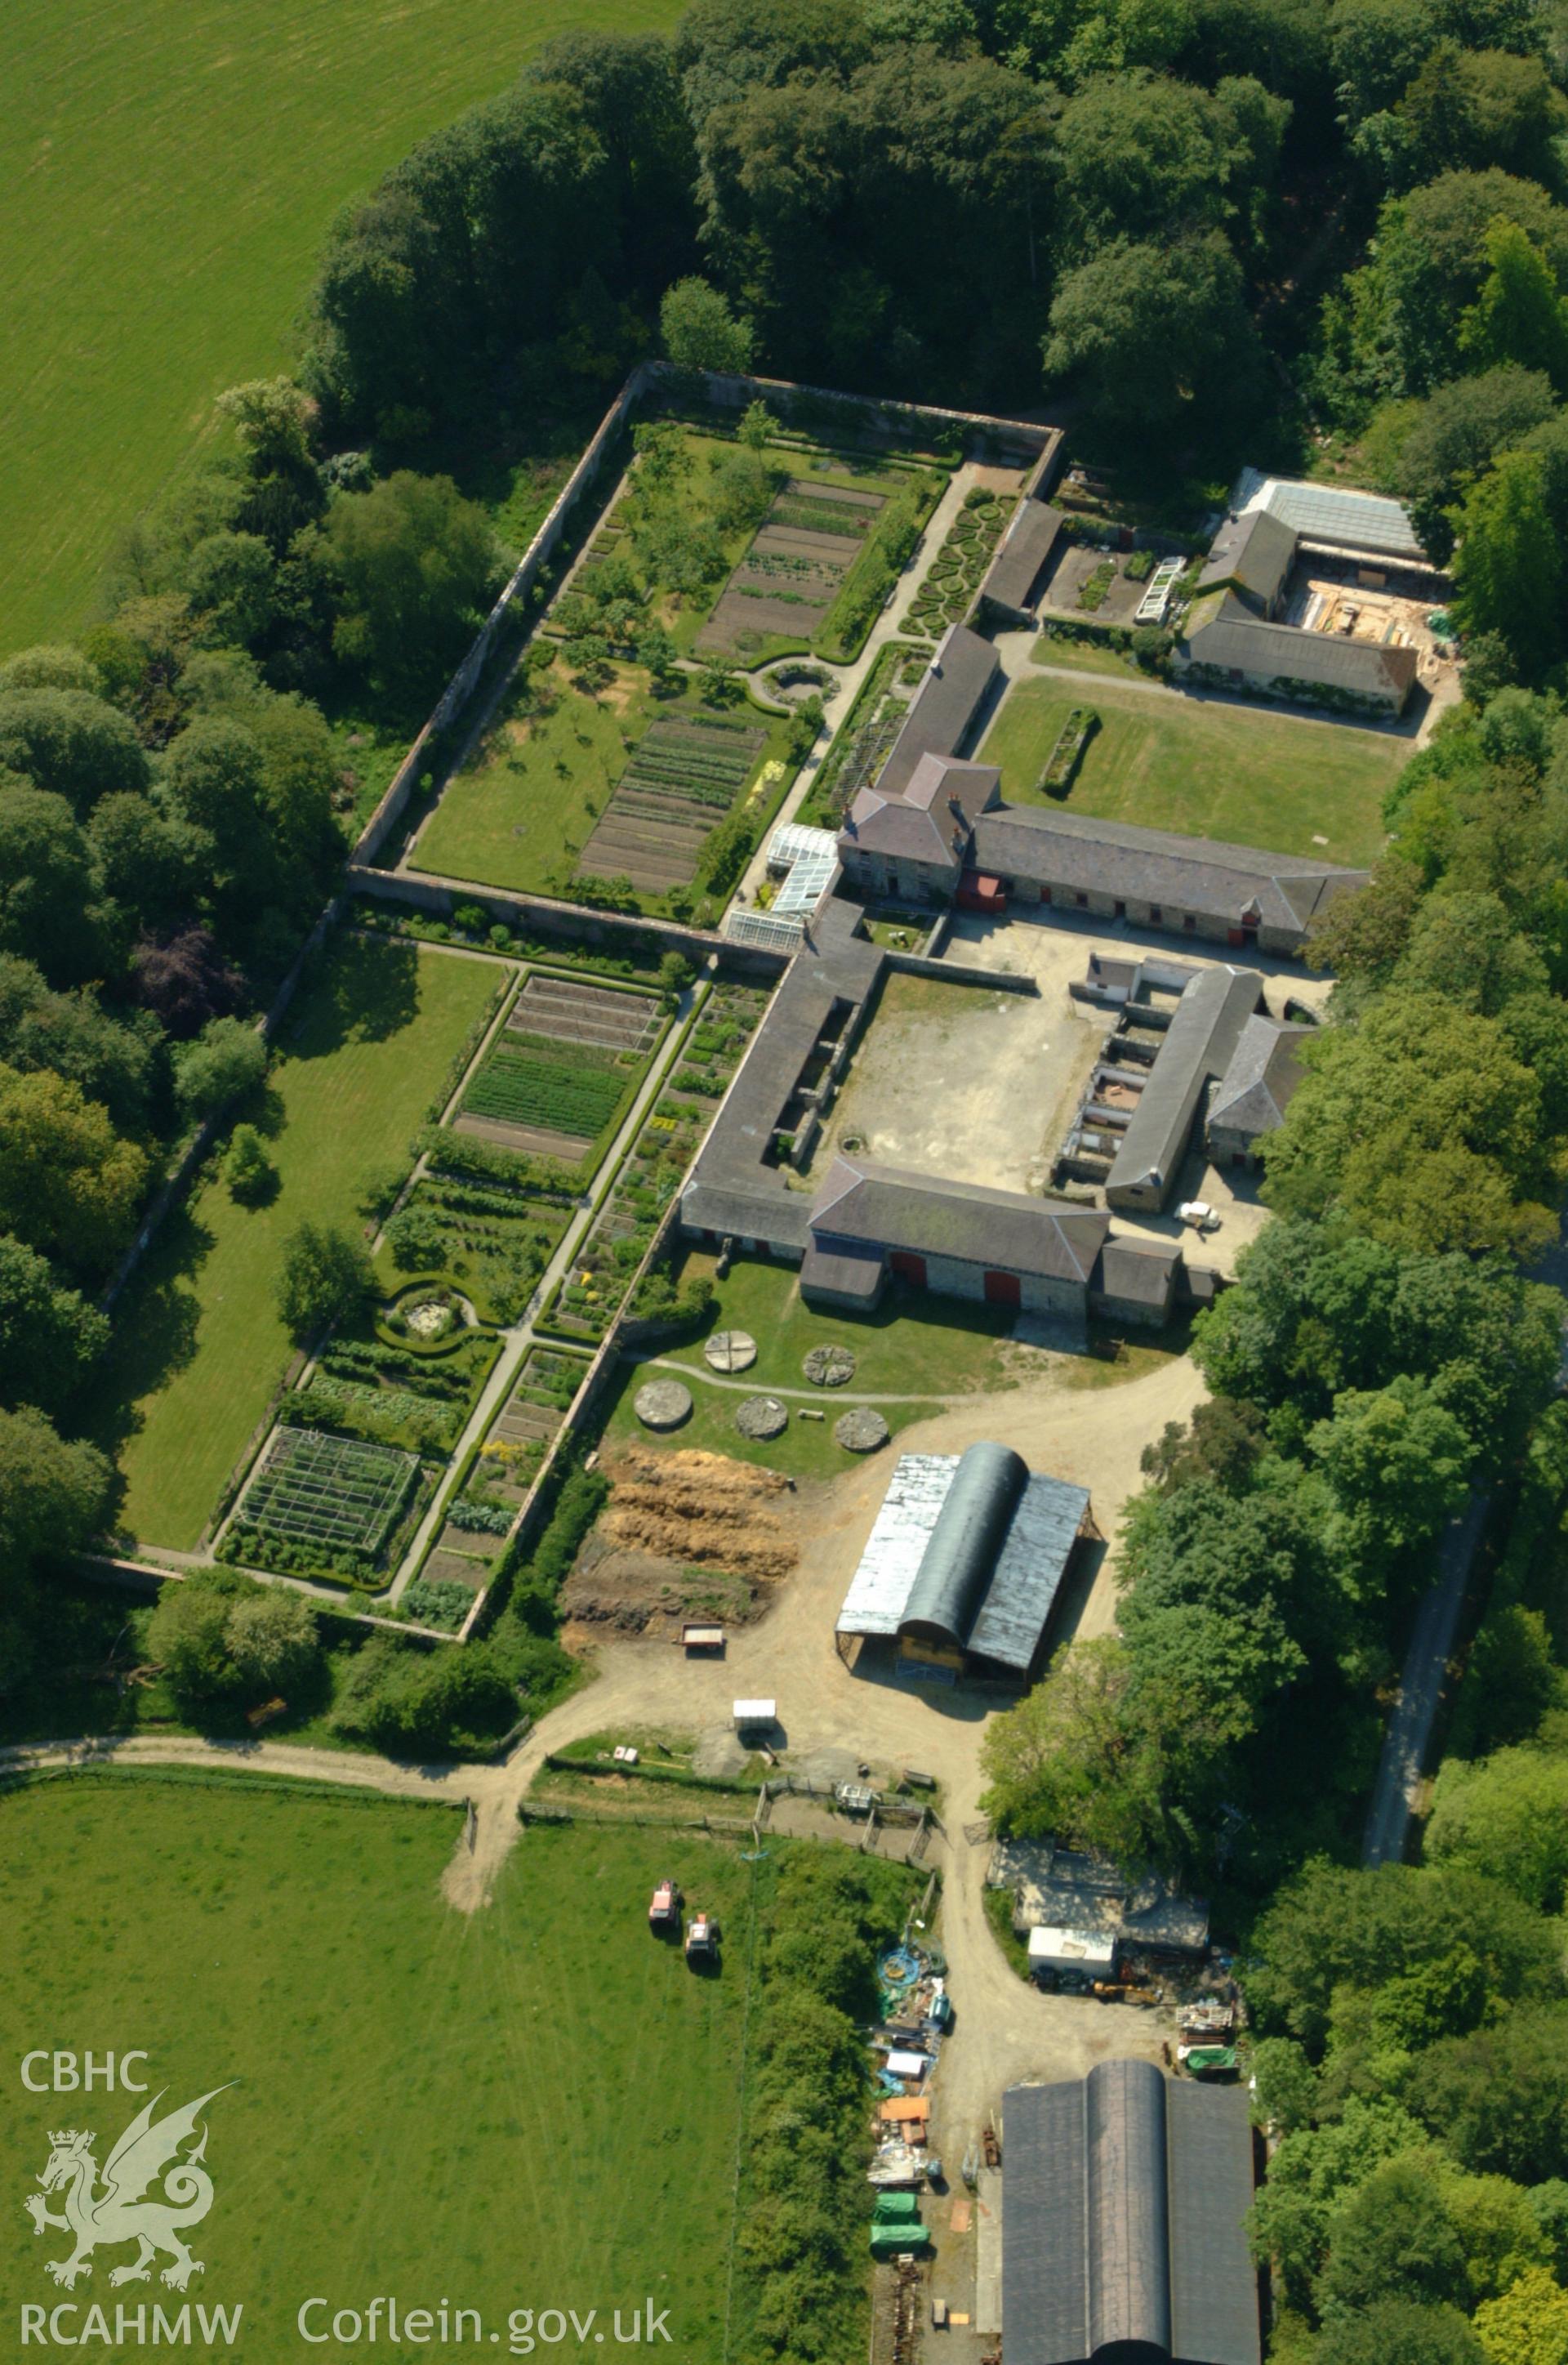 RCAHMW colour oblique aerial photograph of Llanaeron Garden taken on 24/05/2004 by Toby Driver